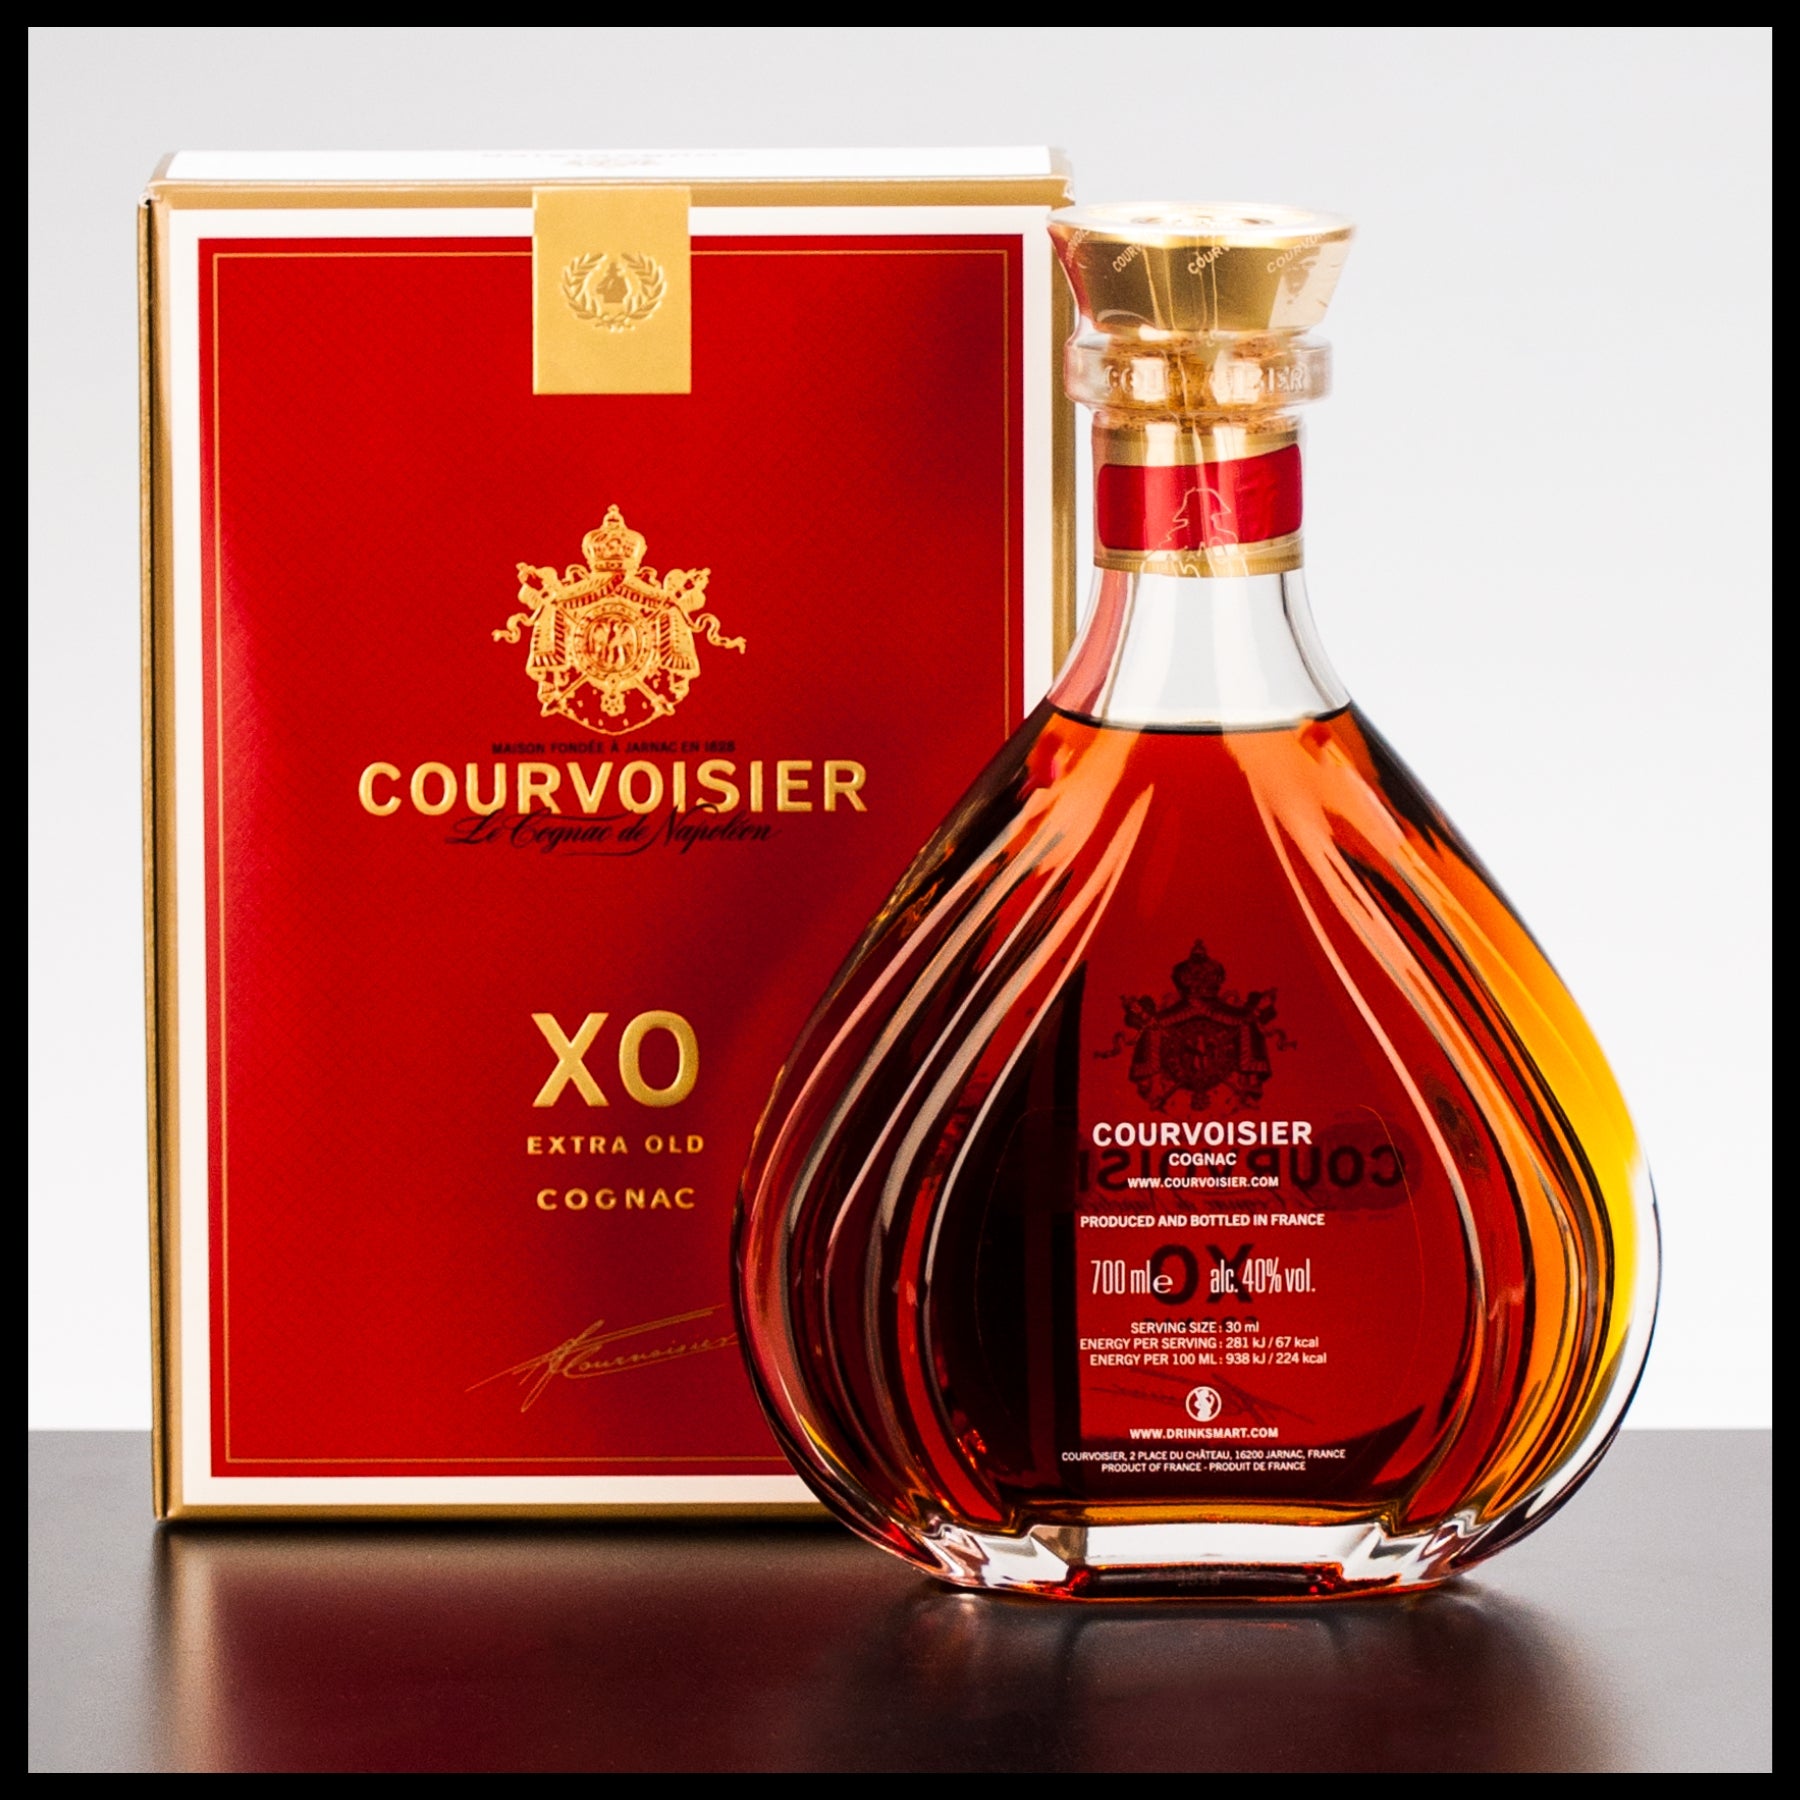 Courvoisier XO Imperial Cognac 0,7L - 40% Vol. - Trinklusiv